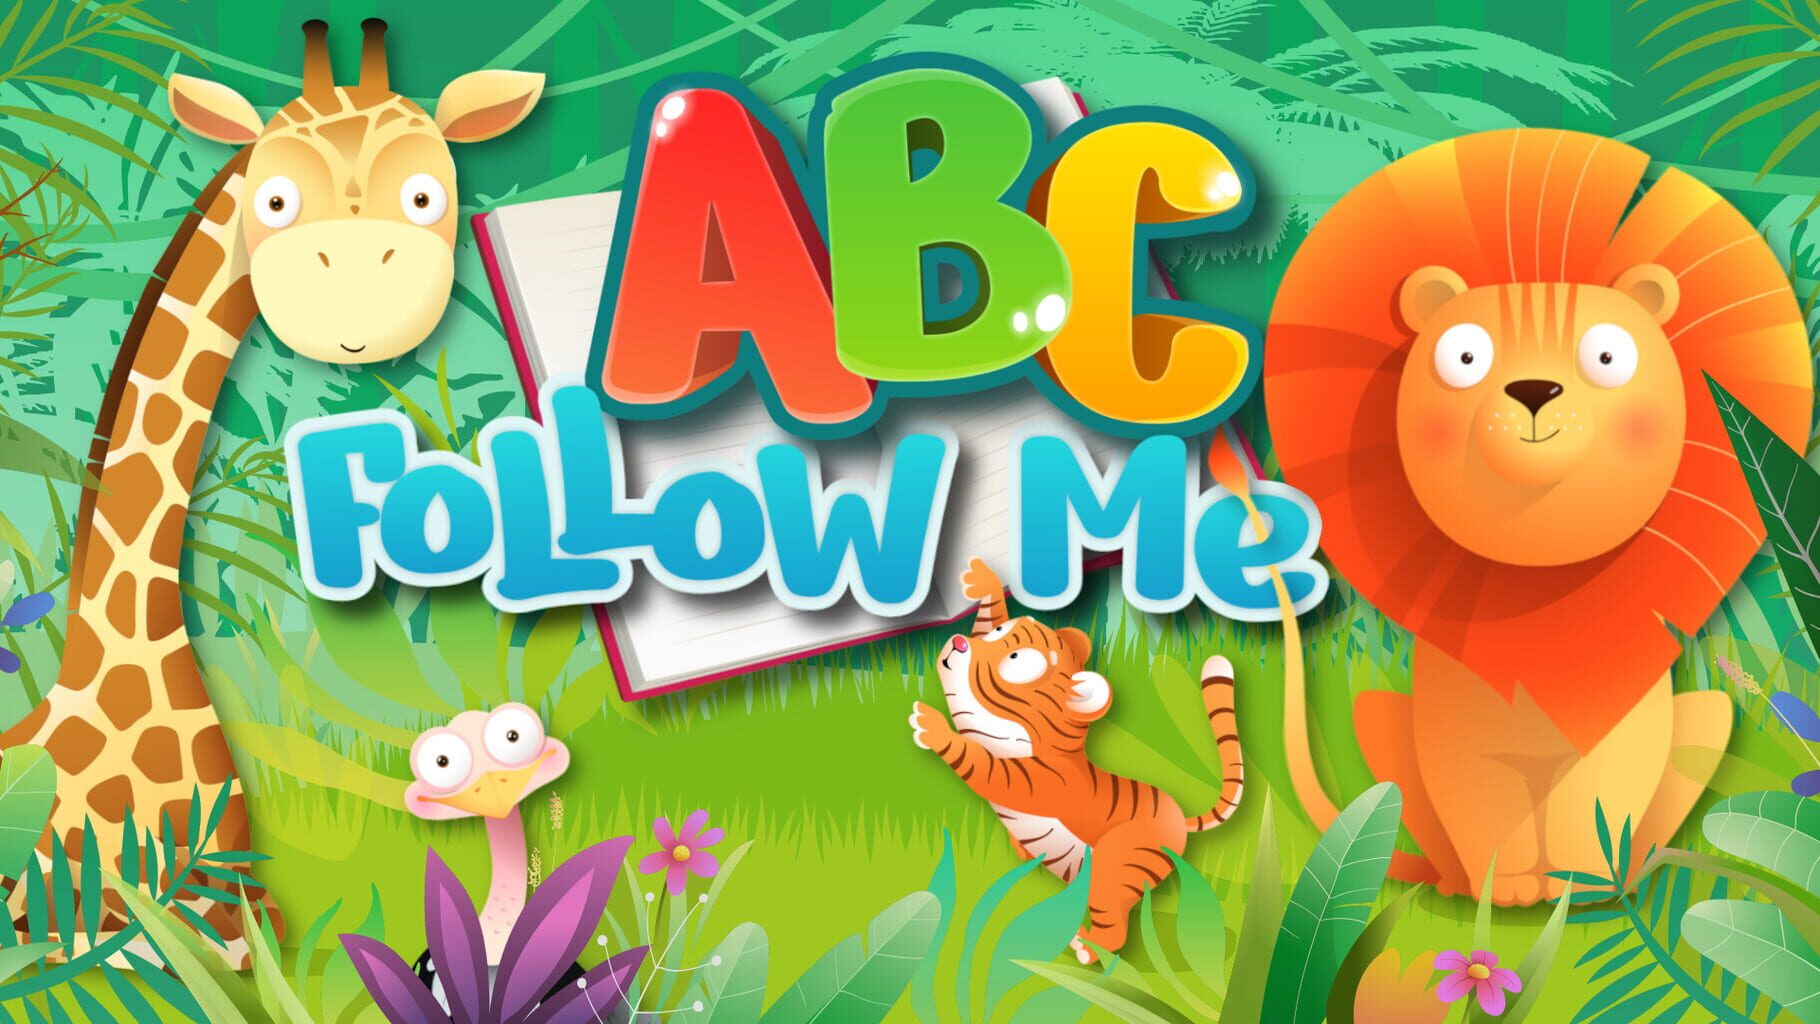 ABC Follow Me: Animals artwork